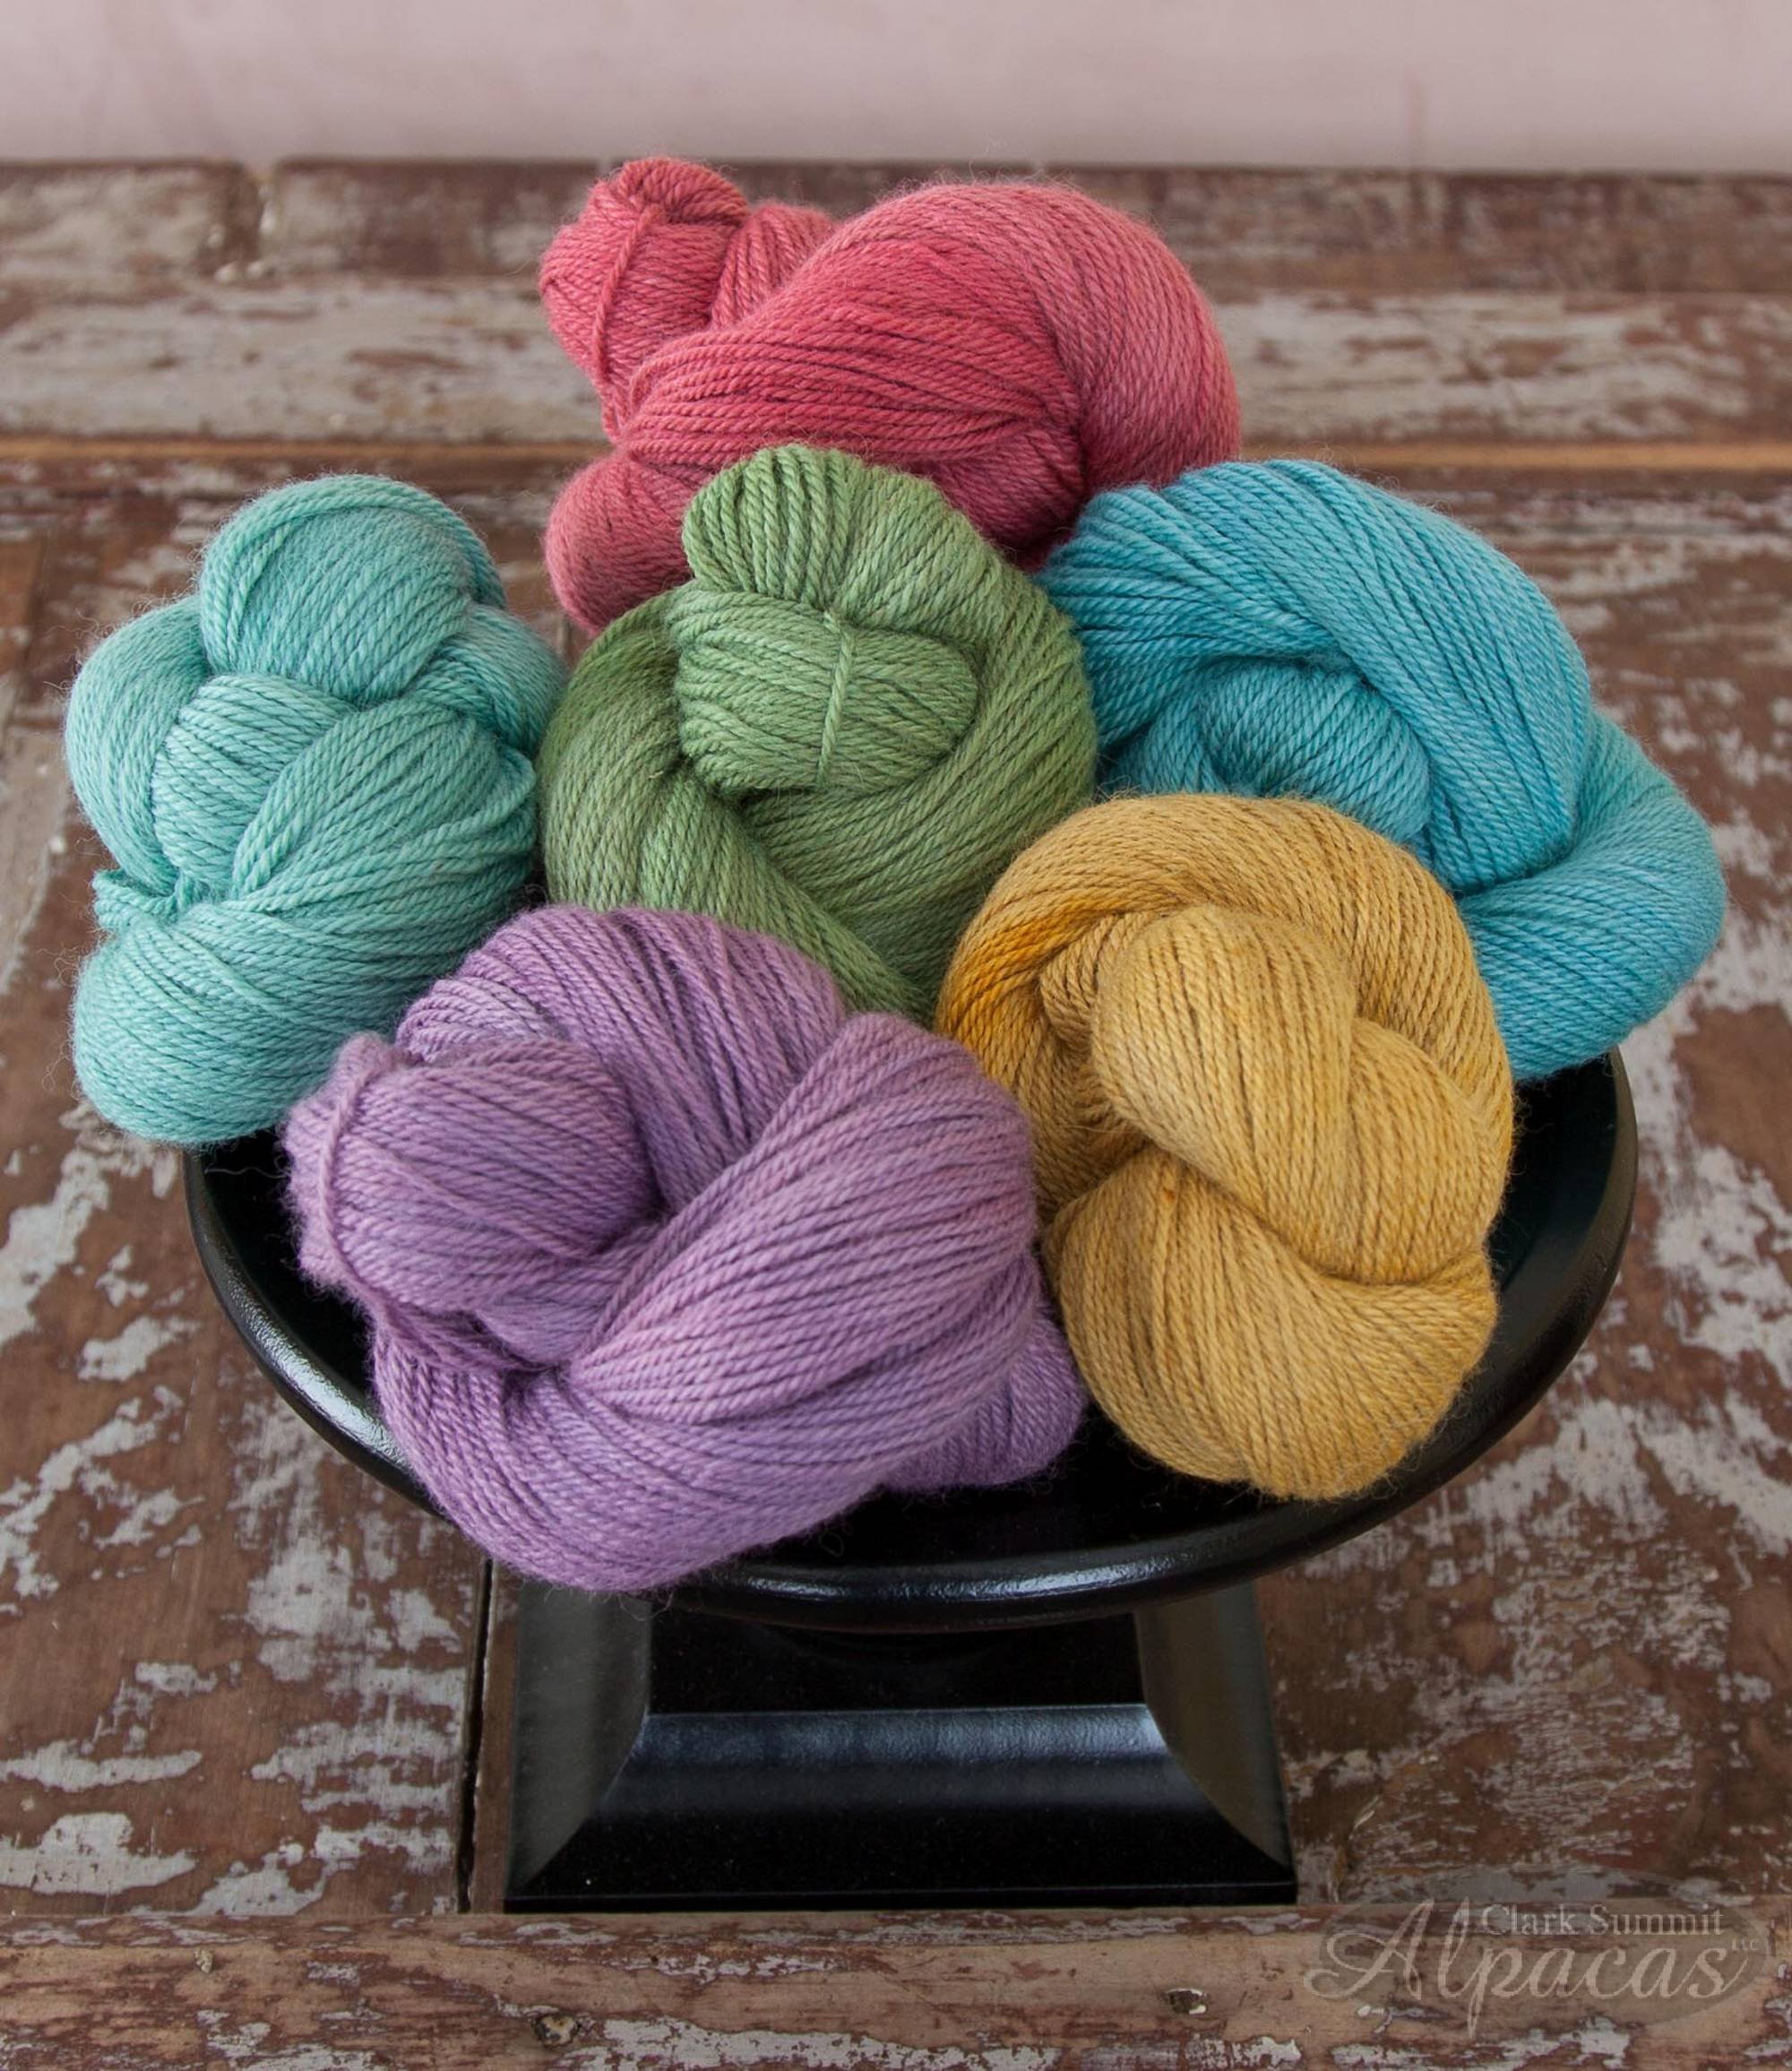 Alpaca Yarn - Hand Dyed with Eco-Friendly Dyes - Great Knitting Crochet  Yarn - DK Weight